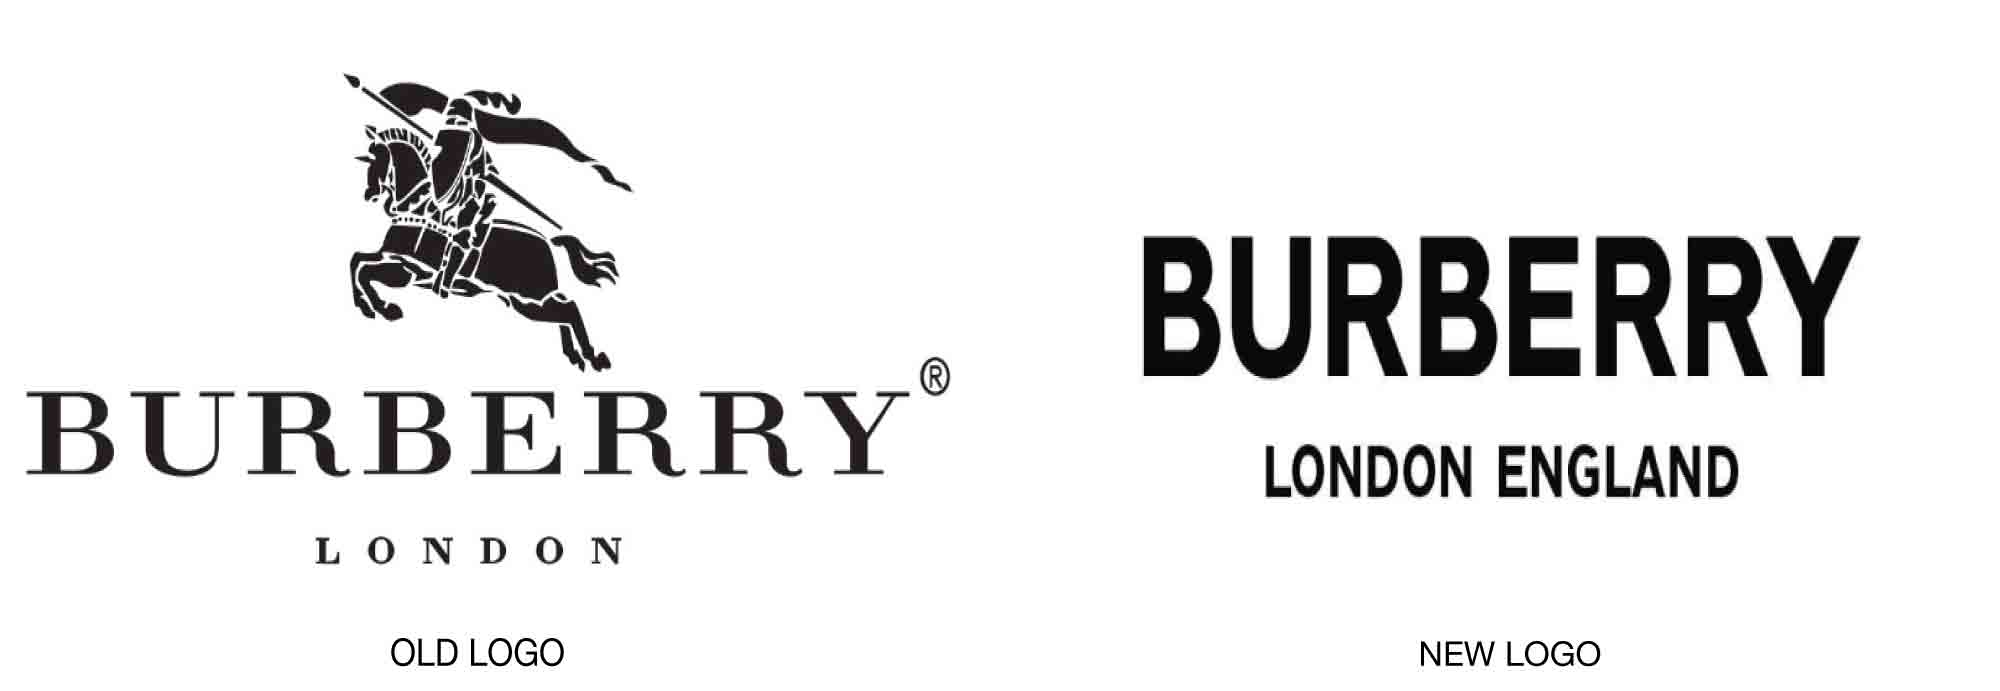 burberry new brand